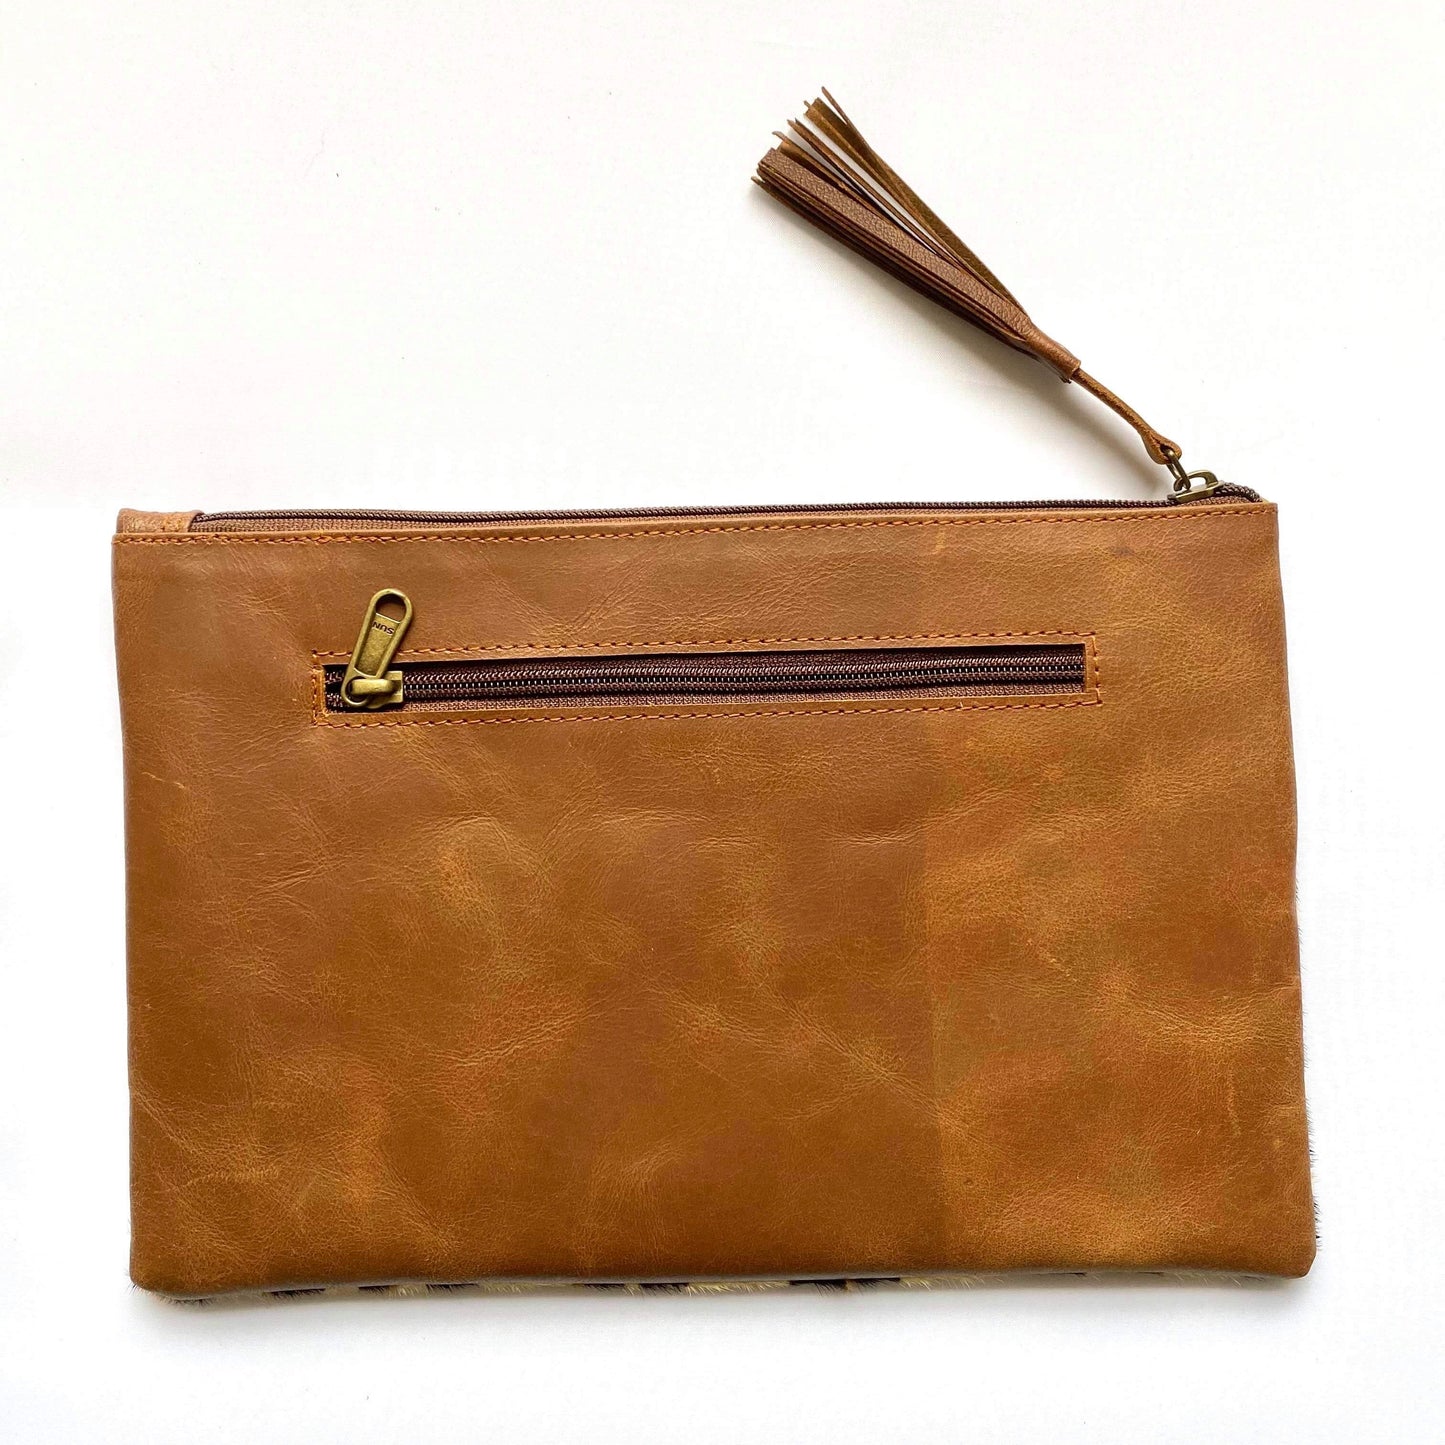 Leather Animal print bag/clutch